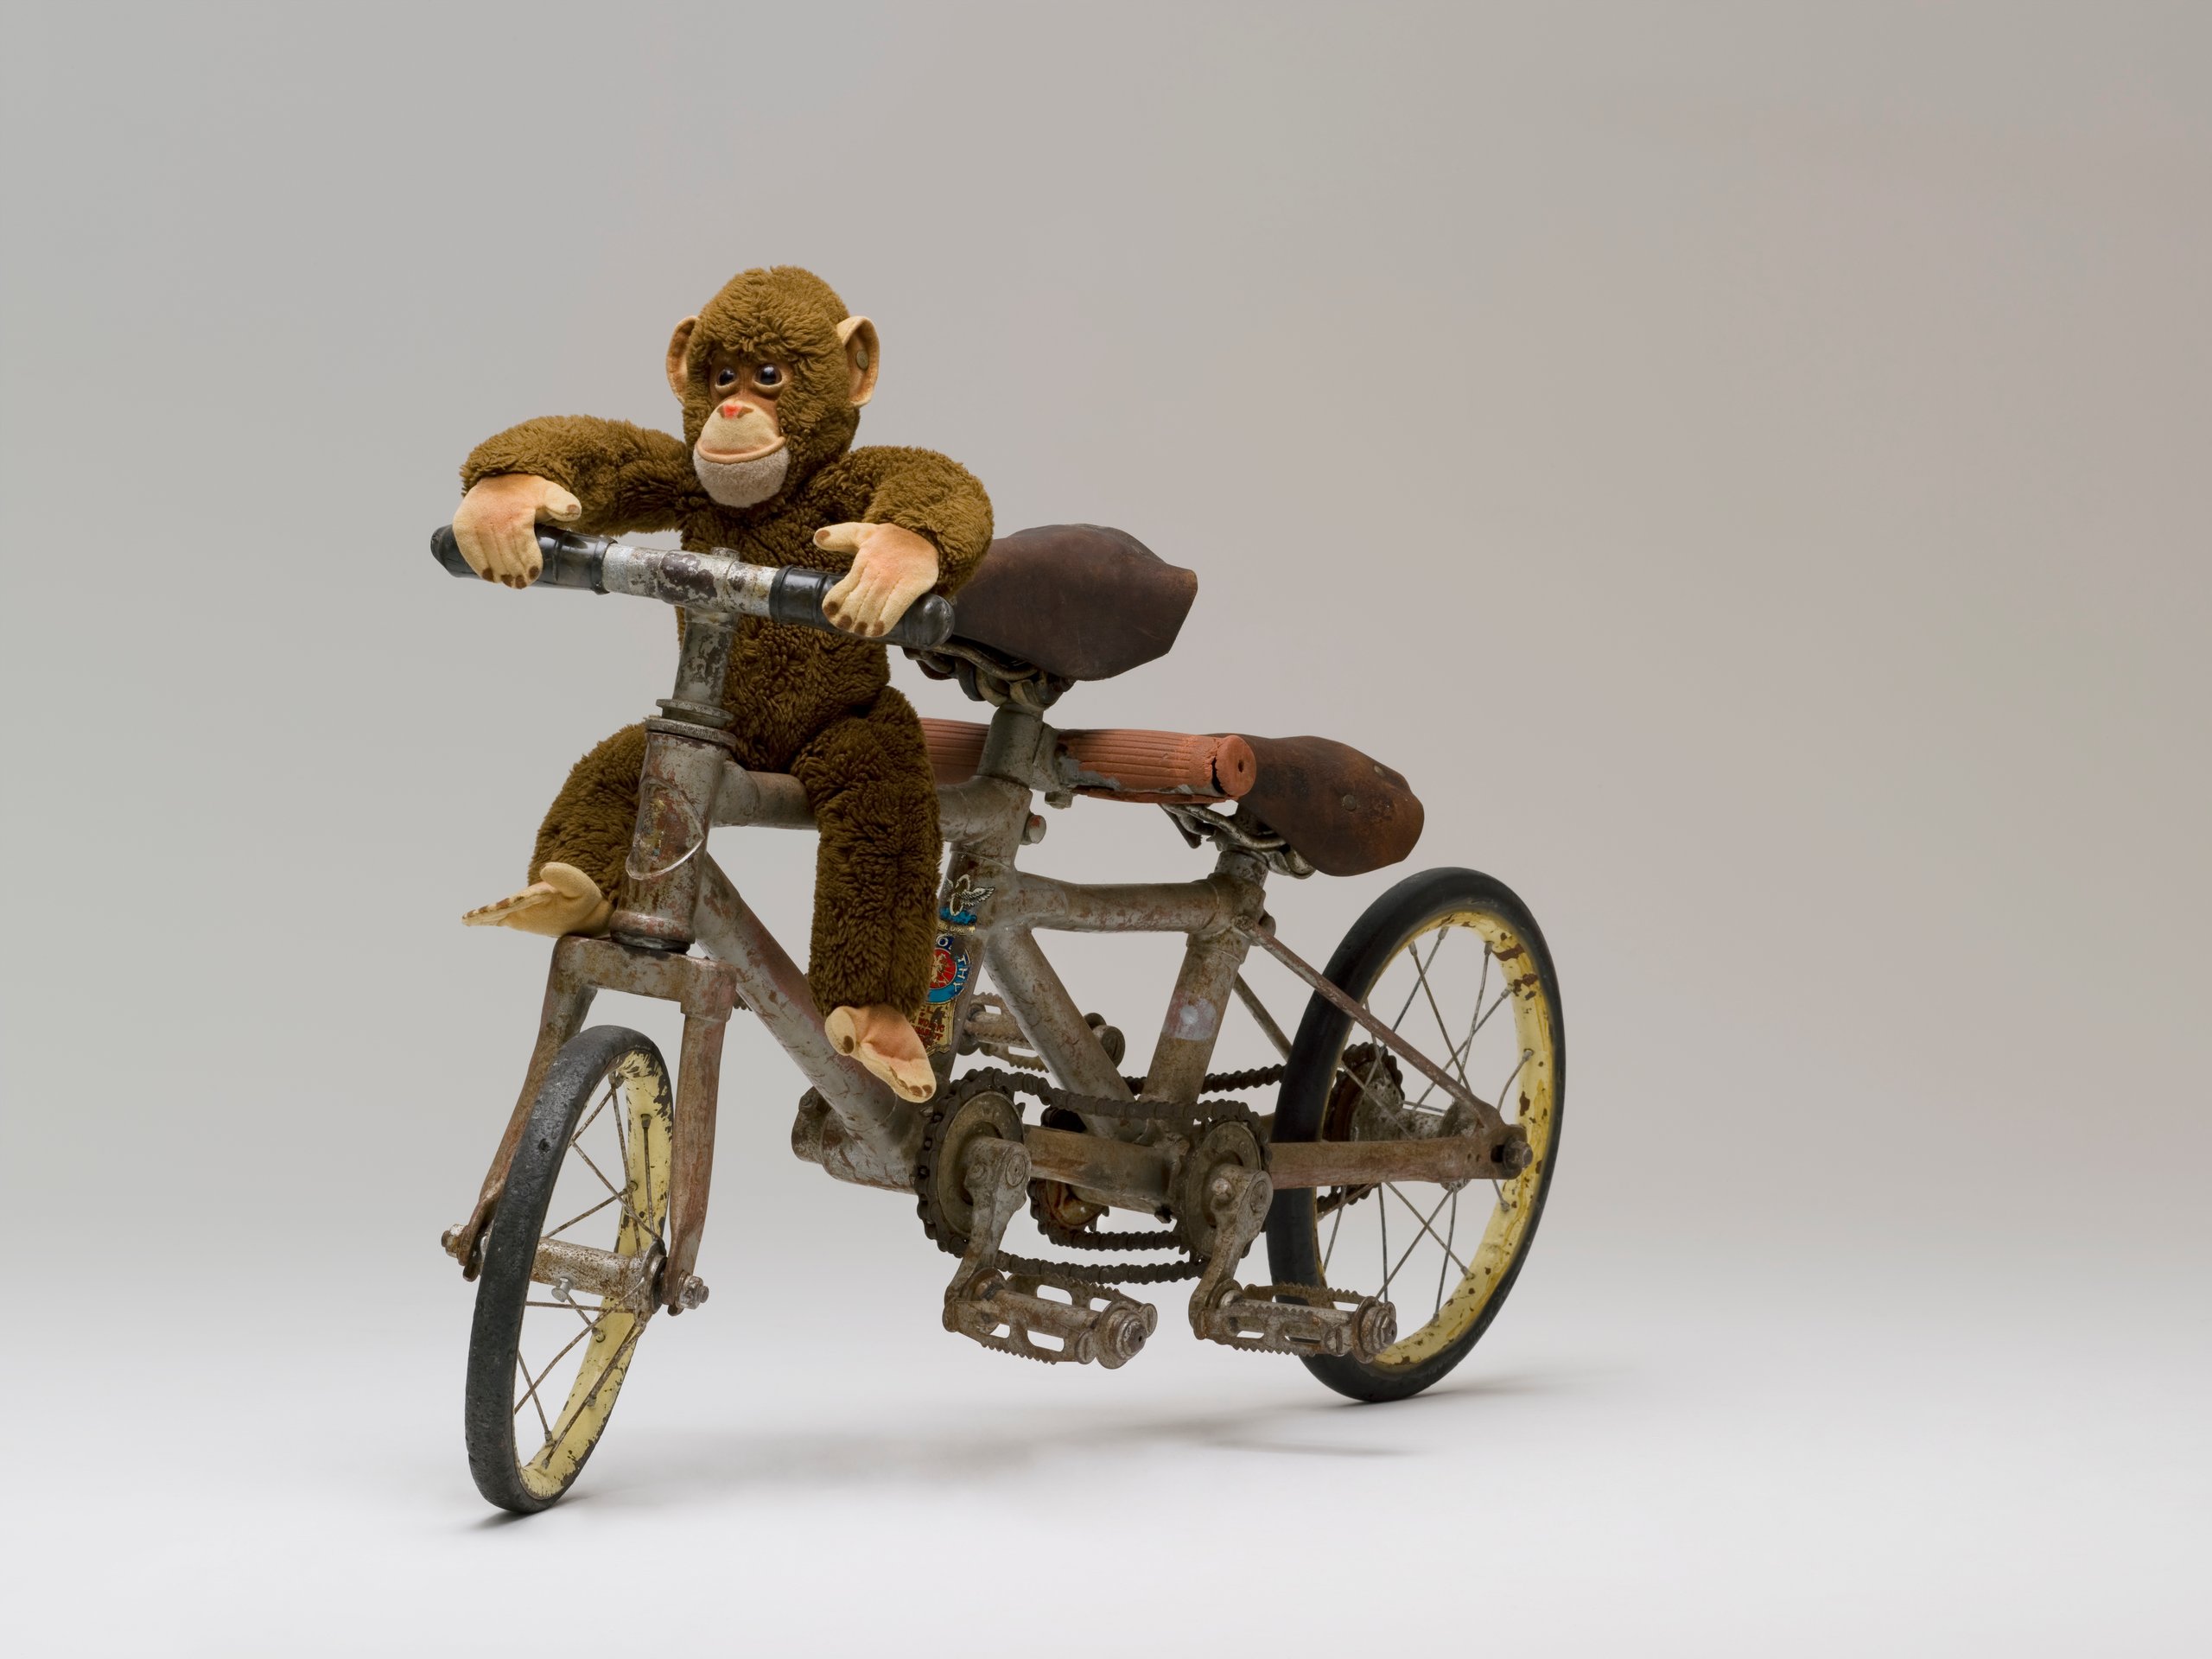 Edworthy tandem monkey bicycle